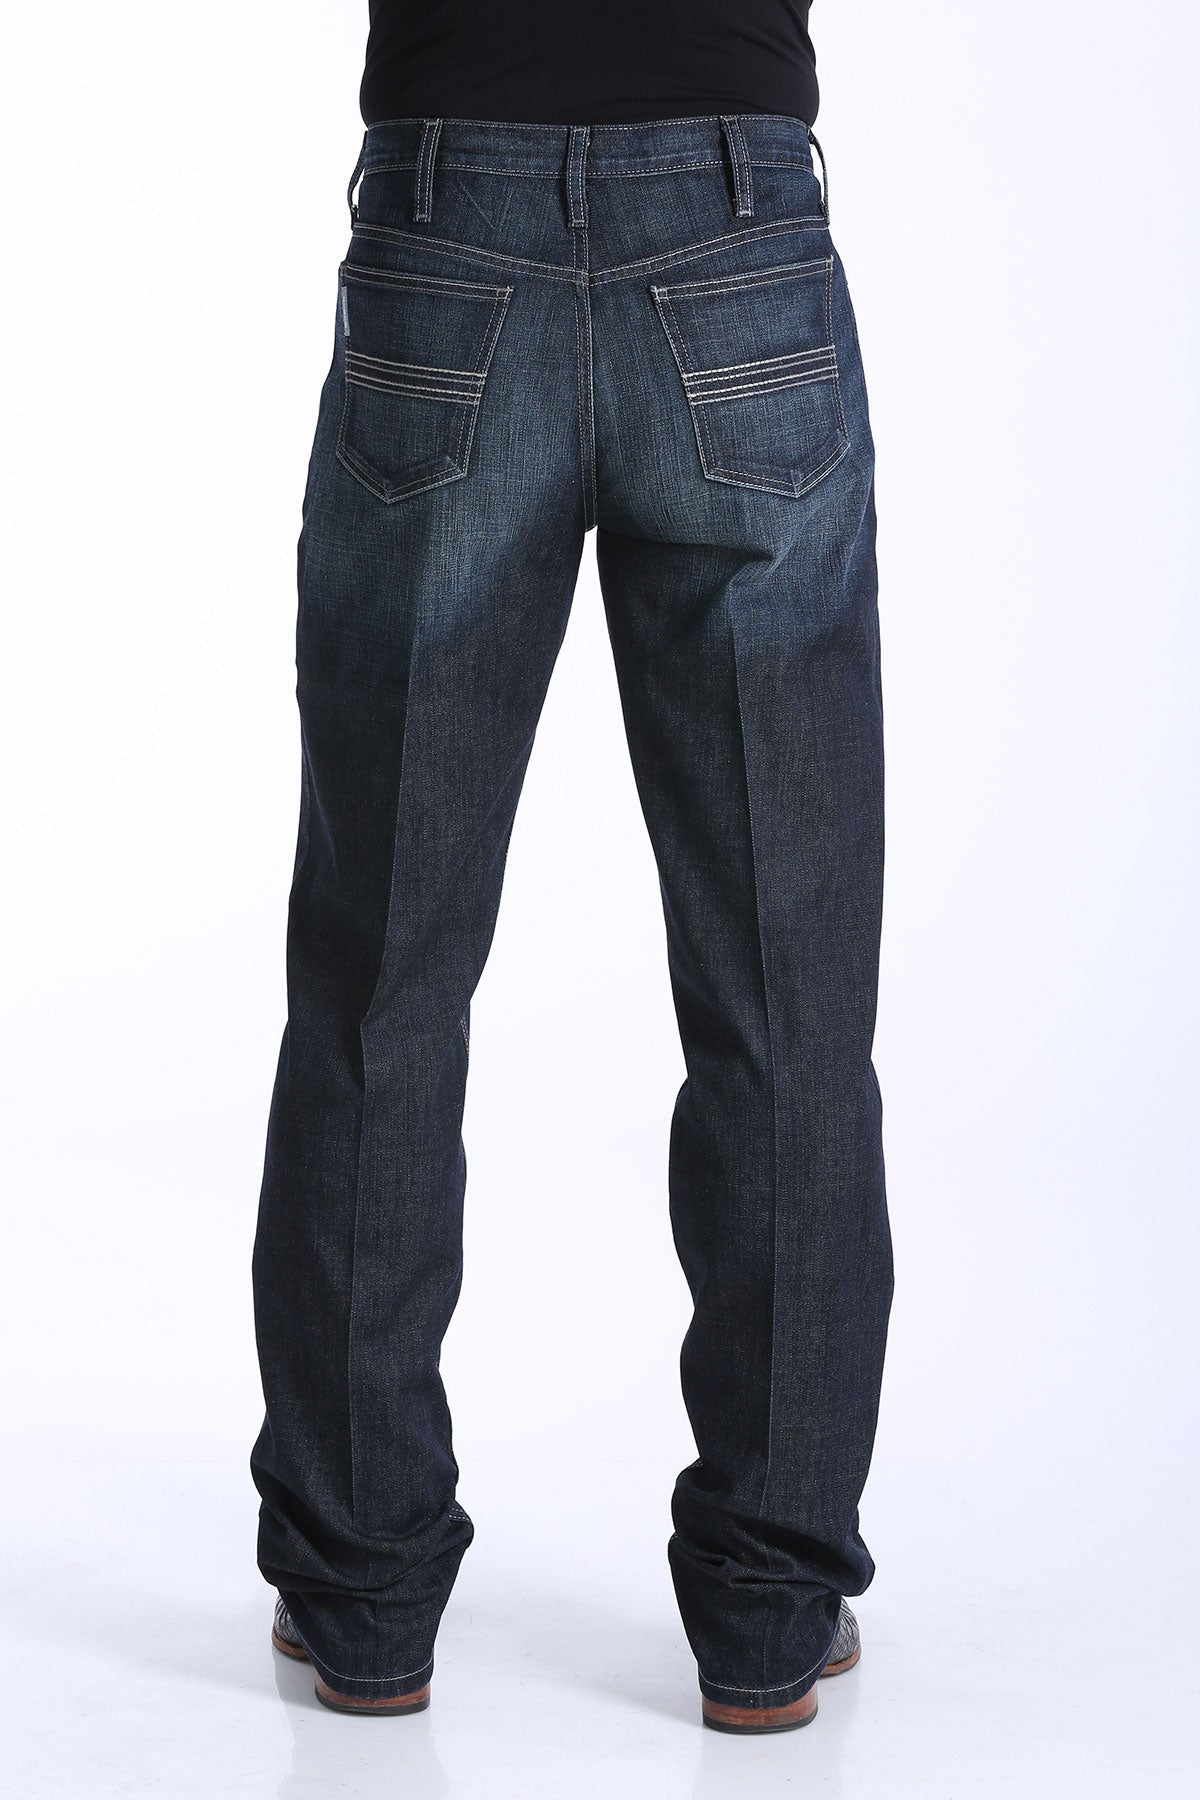 cinch arena flex jeans